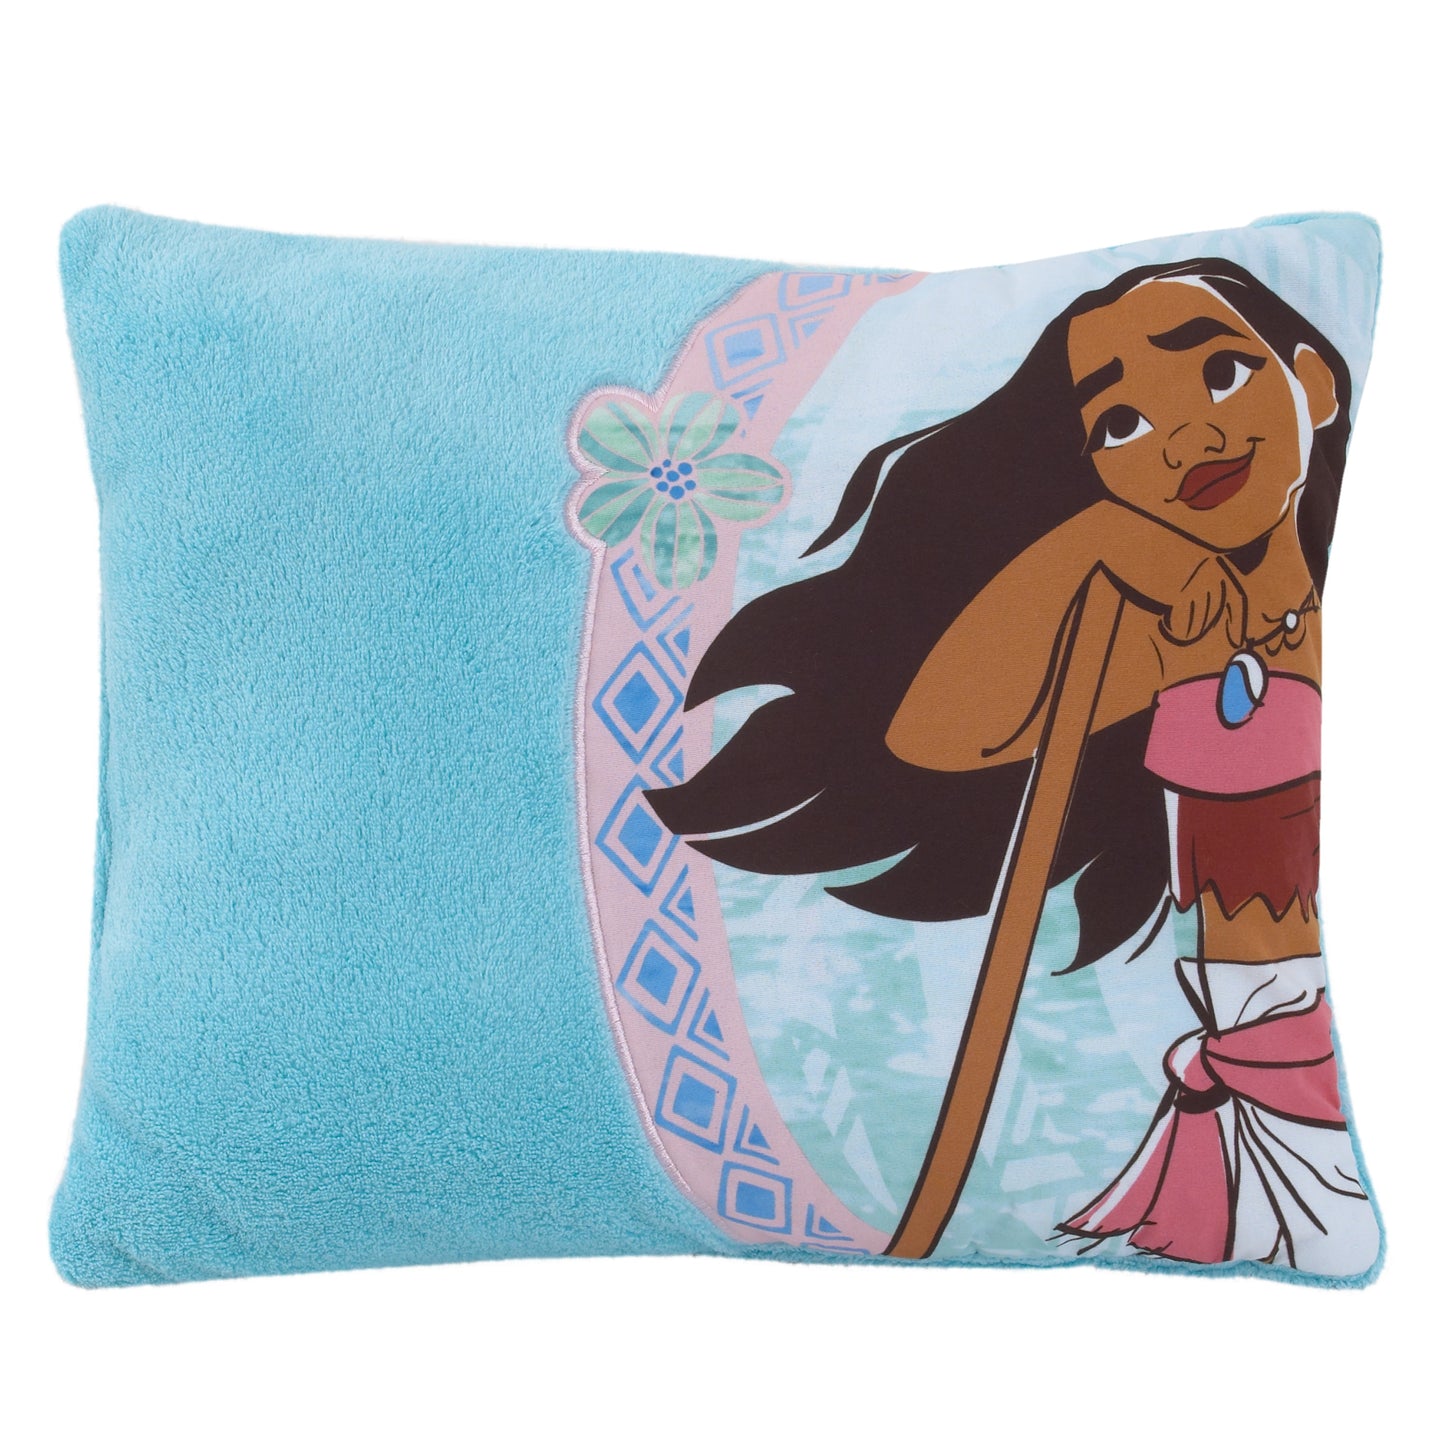 Disney Moana Decorative Toddler Pillow, Turquoise